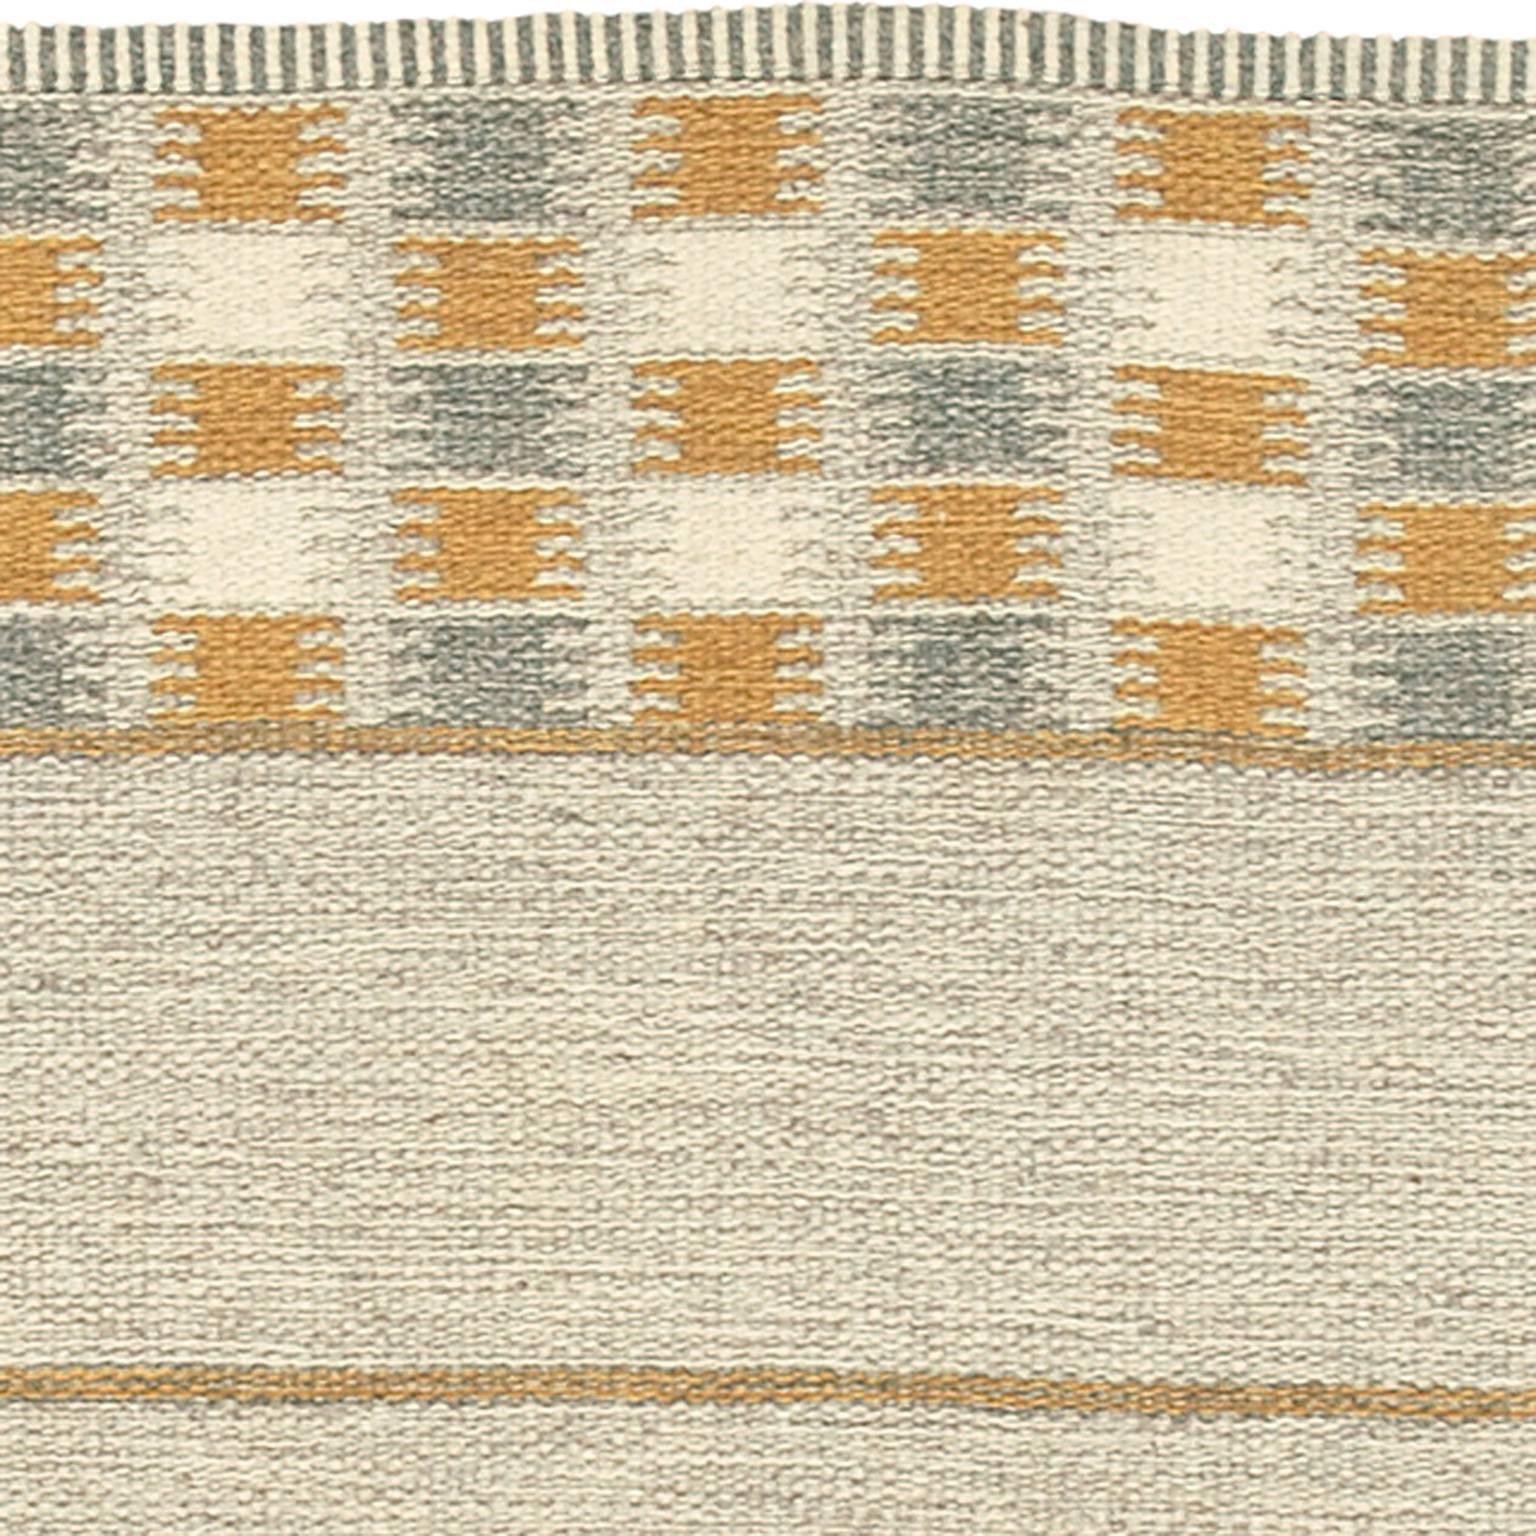 Double sided Swedish flat weave